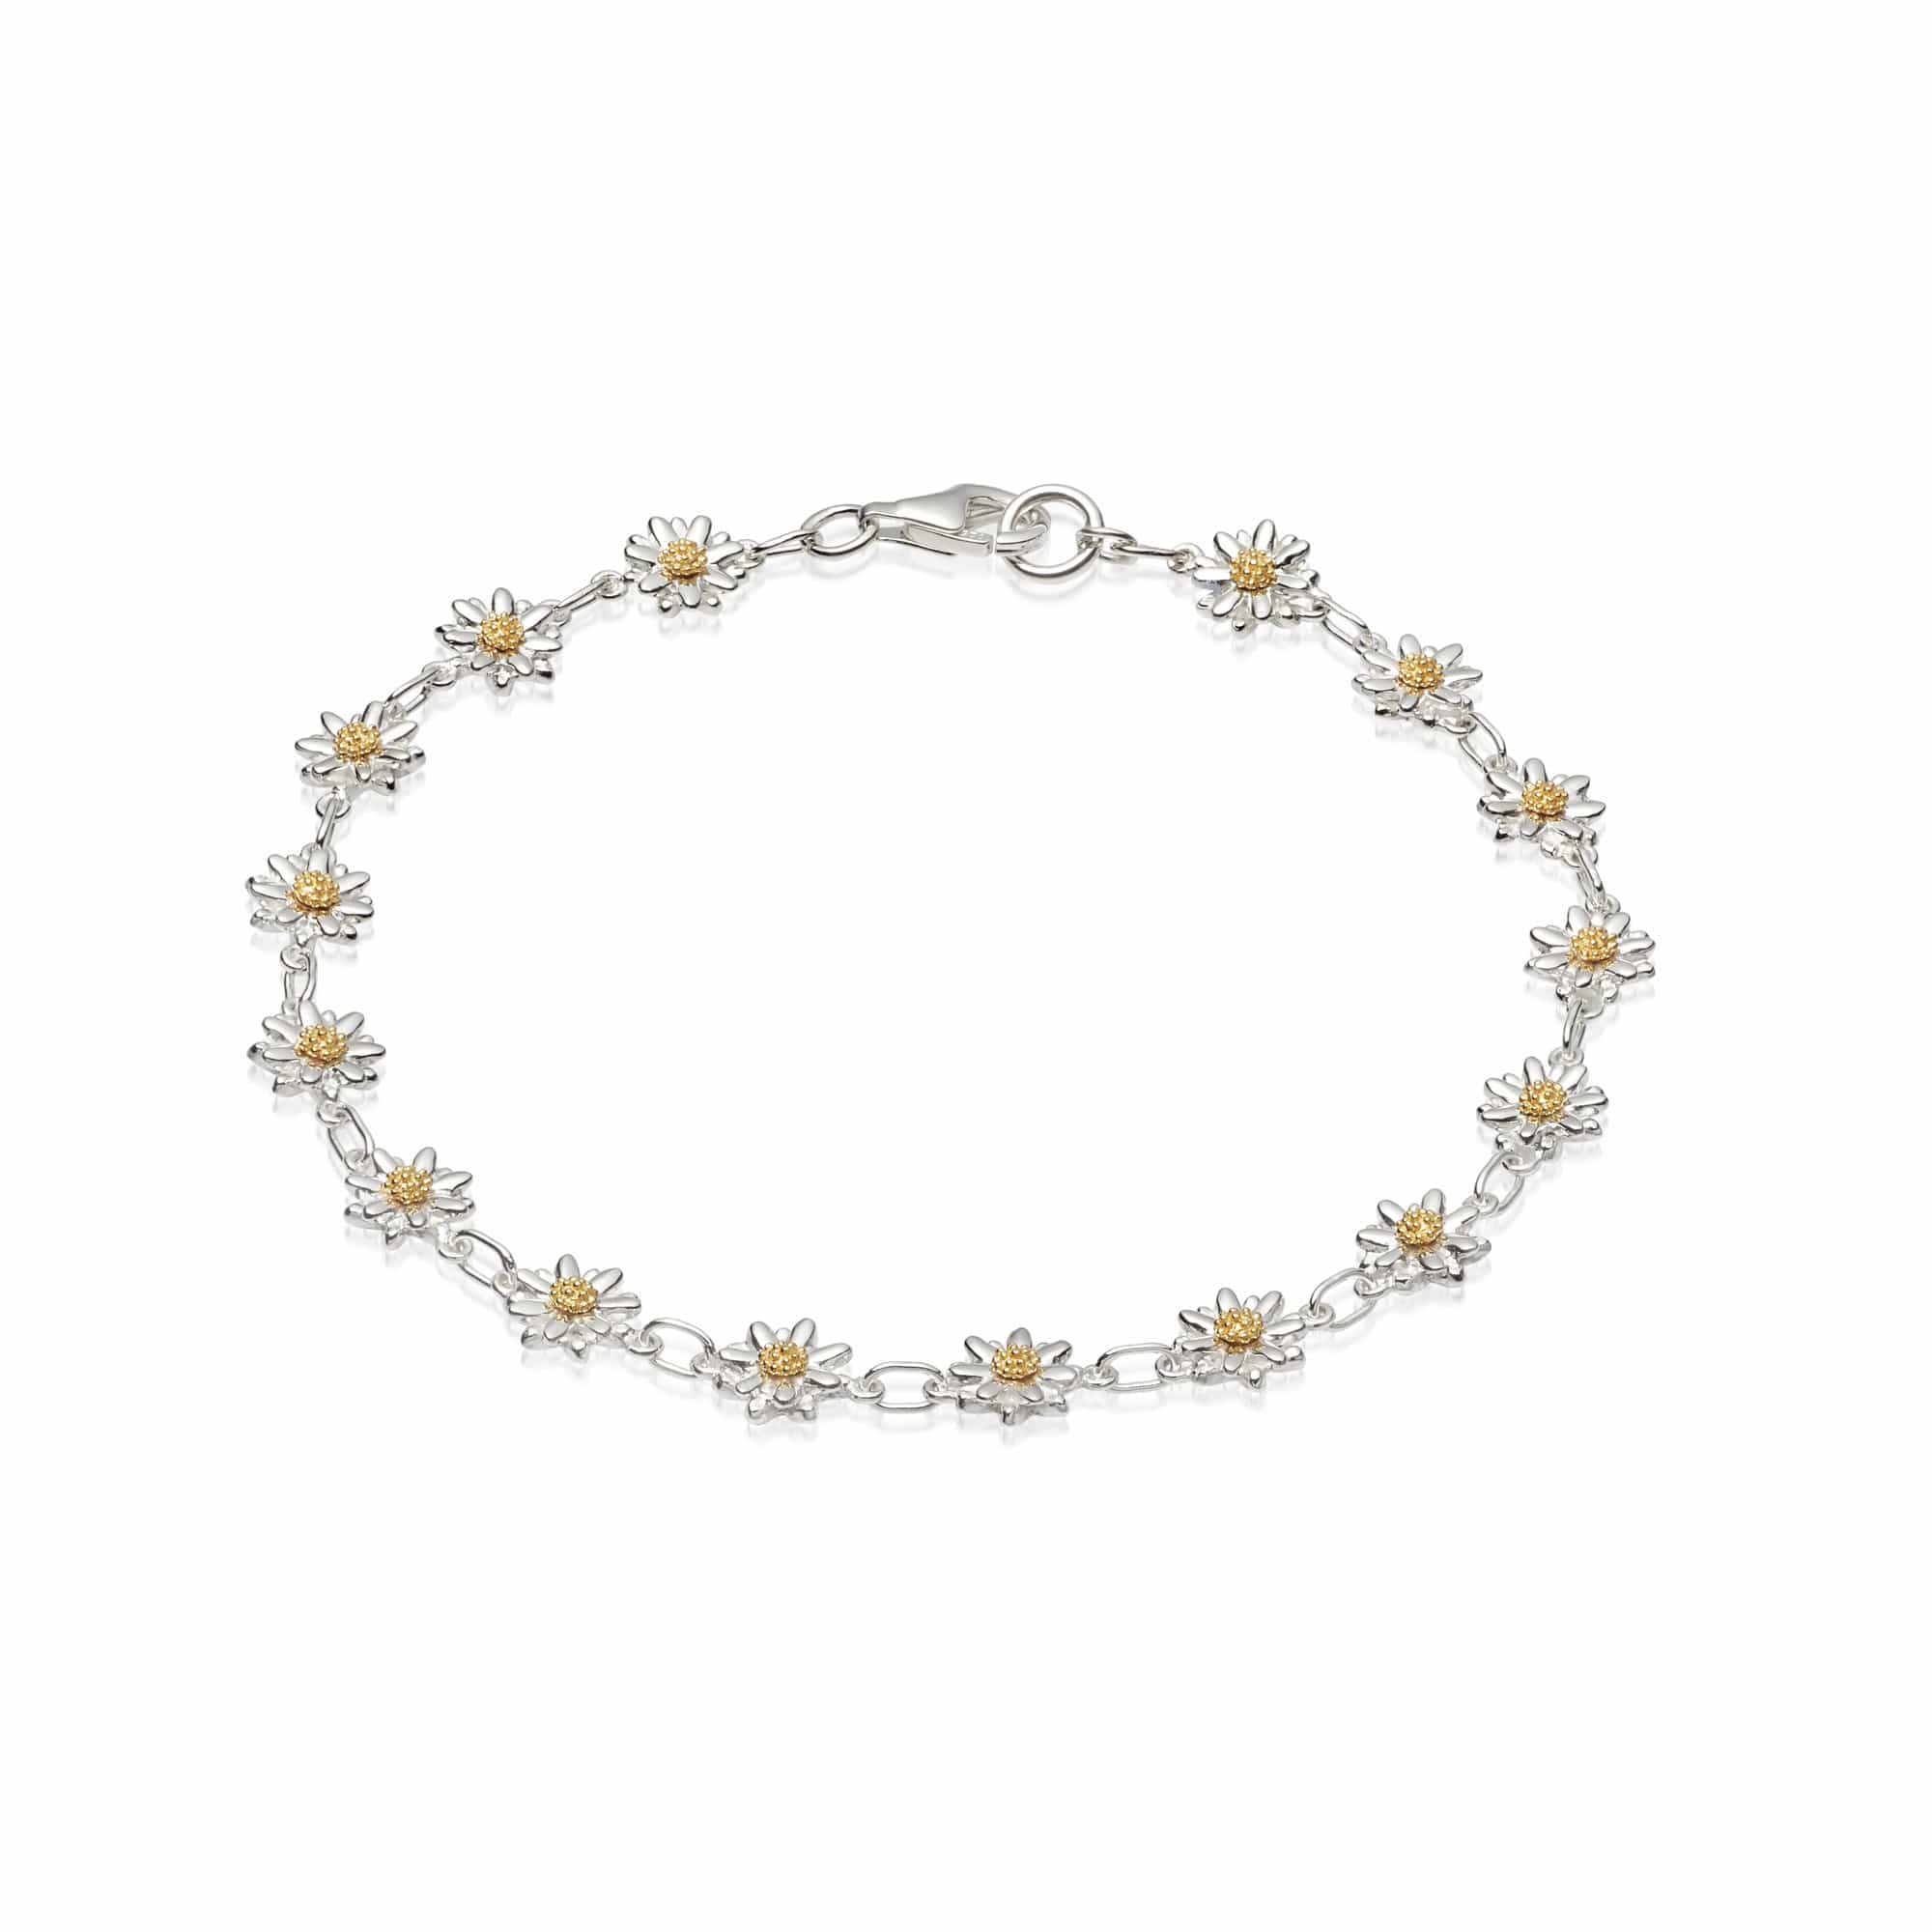 Daisy Chain Bracelet. Seed Bead Rainbow Flower Bracelet Adjustable  Waterproof Jewelry. Made in USA – Just Bead It